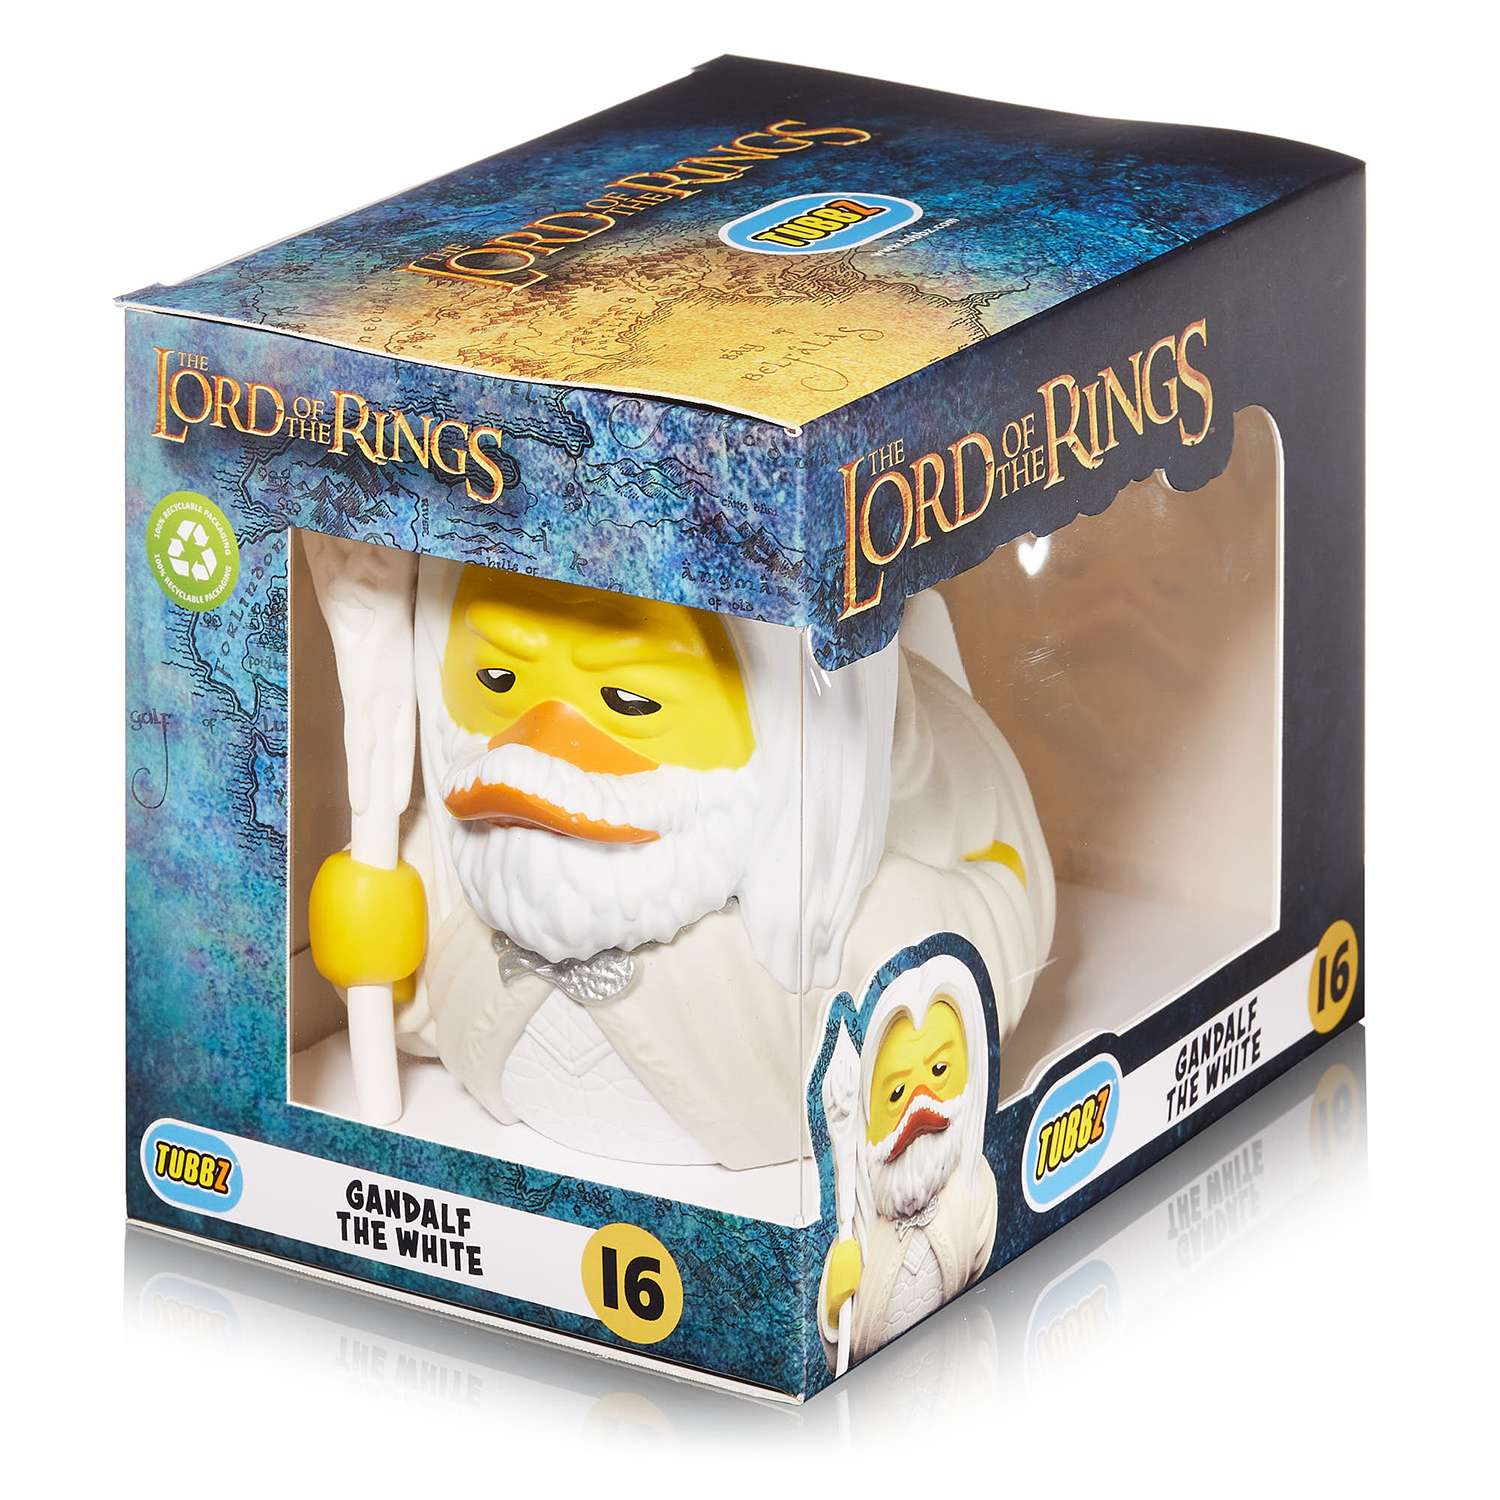 Фигурка The Lord of the Rings Утка Tubbz Гендальф Белый из Властелина колец Boxed Edition без ванны - фото 2